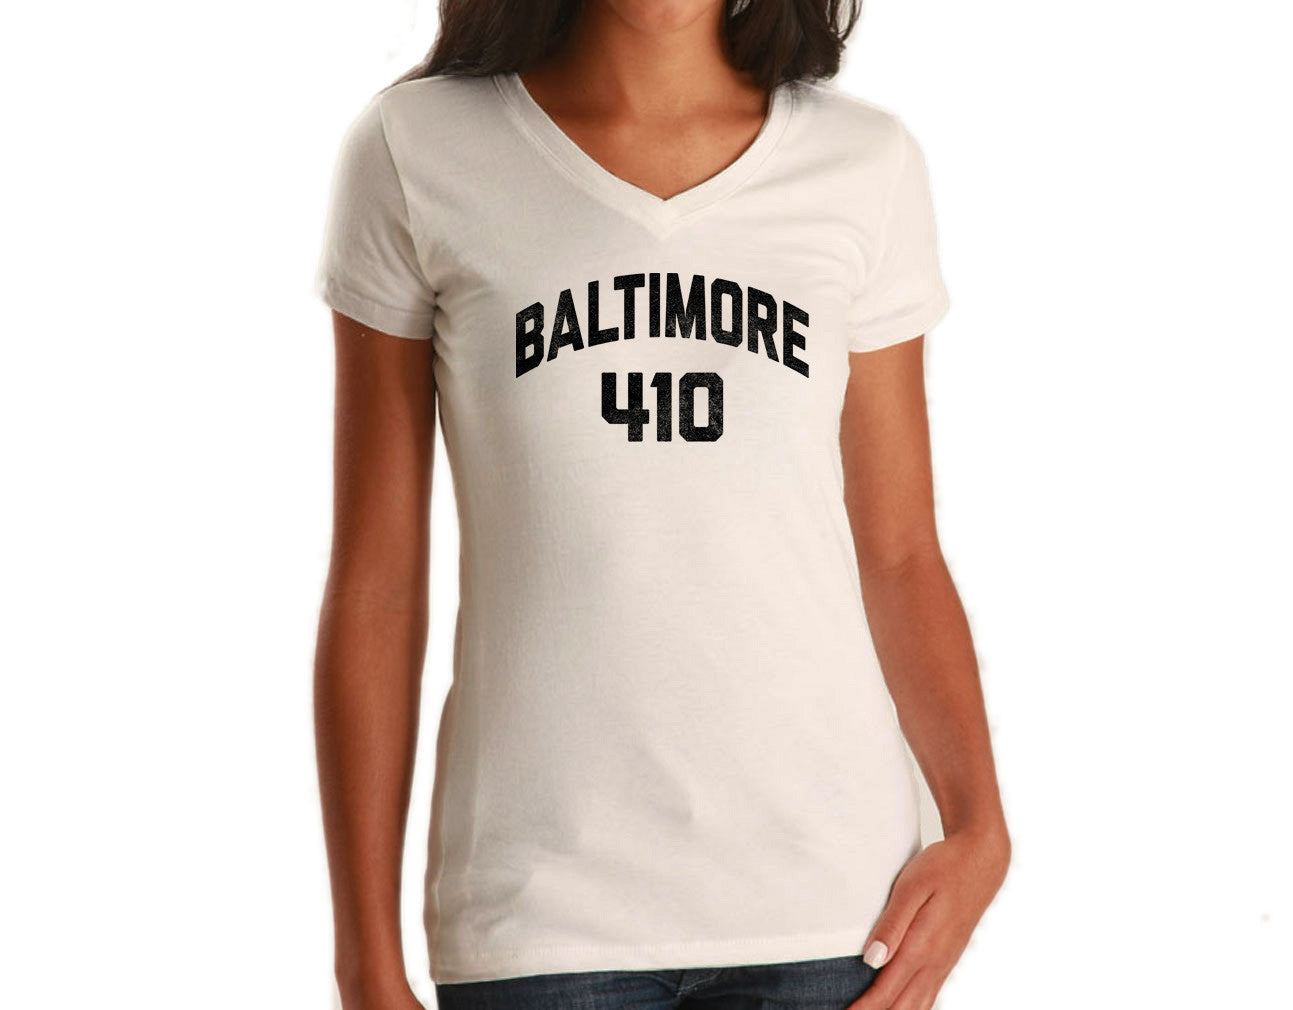 Women's Baltimore 410 Area Code Vneck T-Shirt